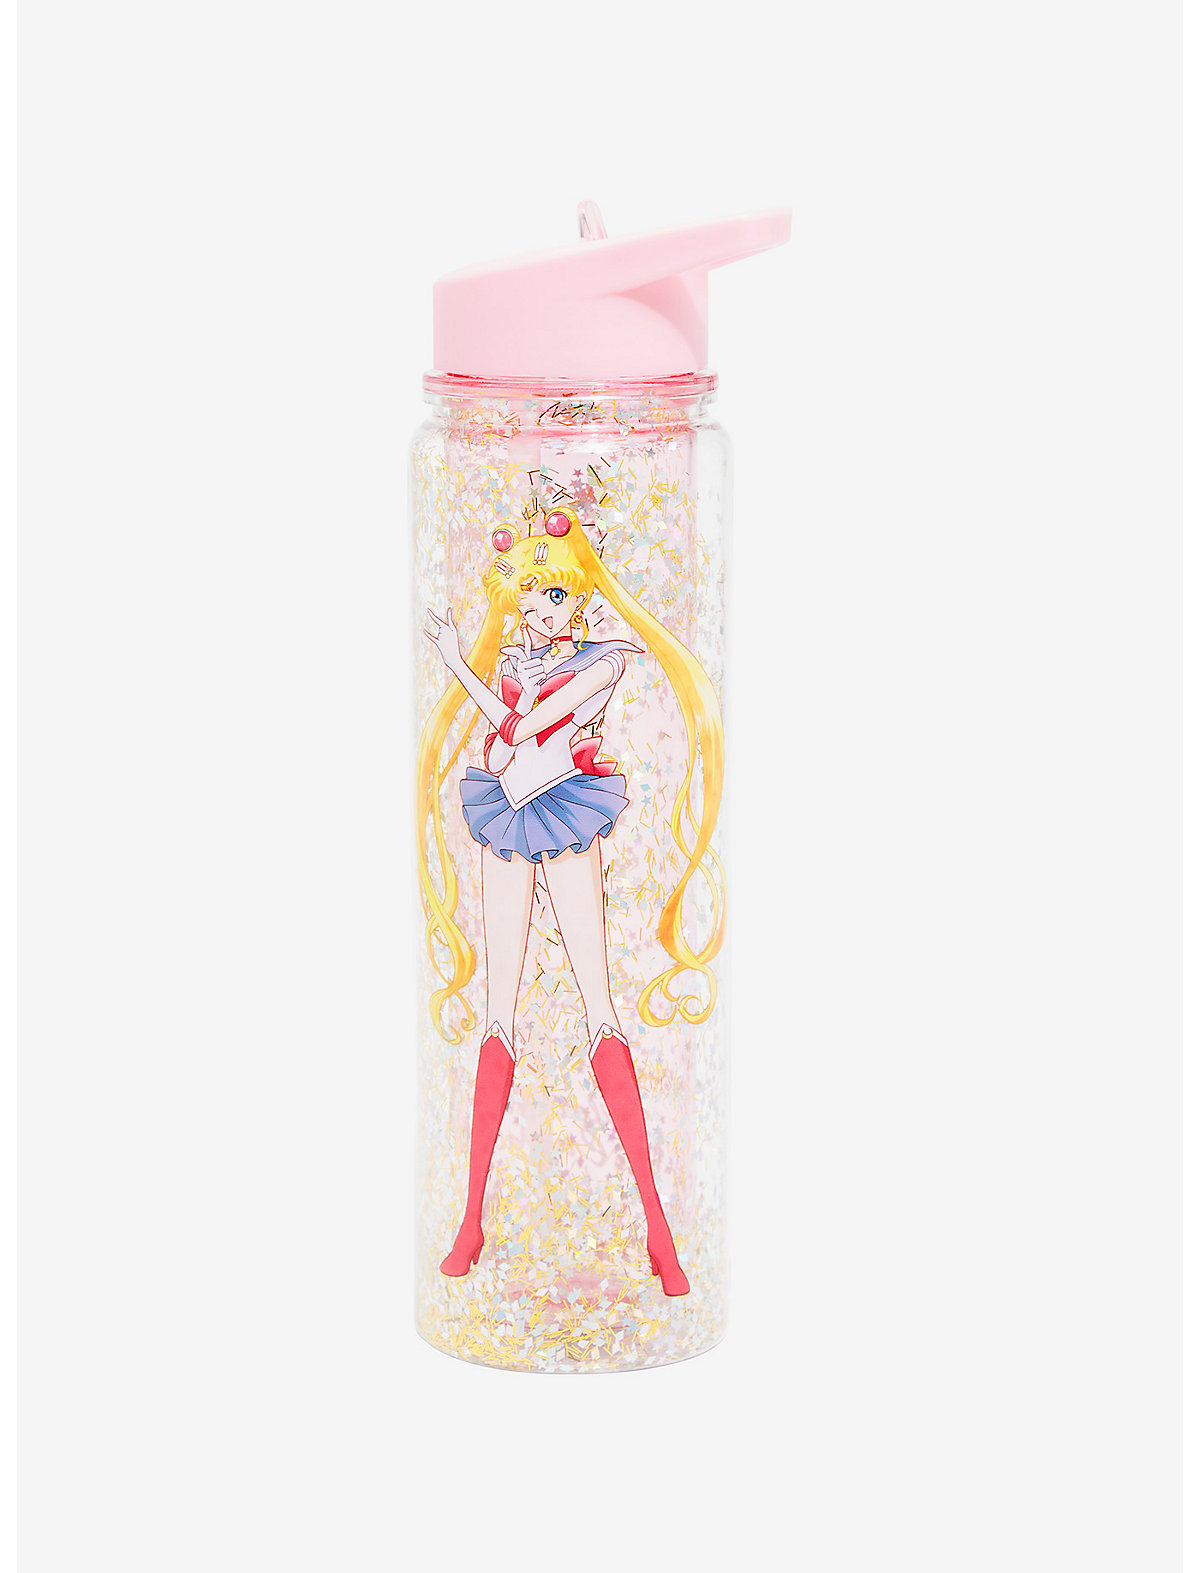 Sailor Moon Character Portrait Lunch Box